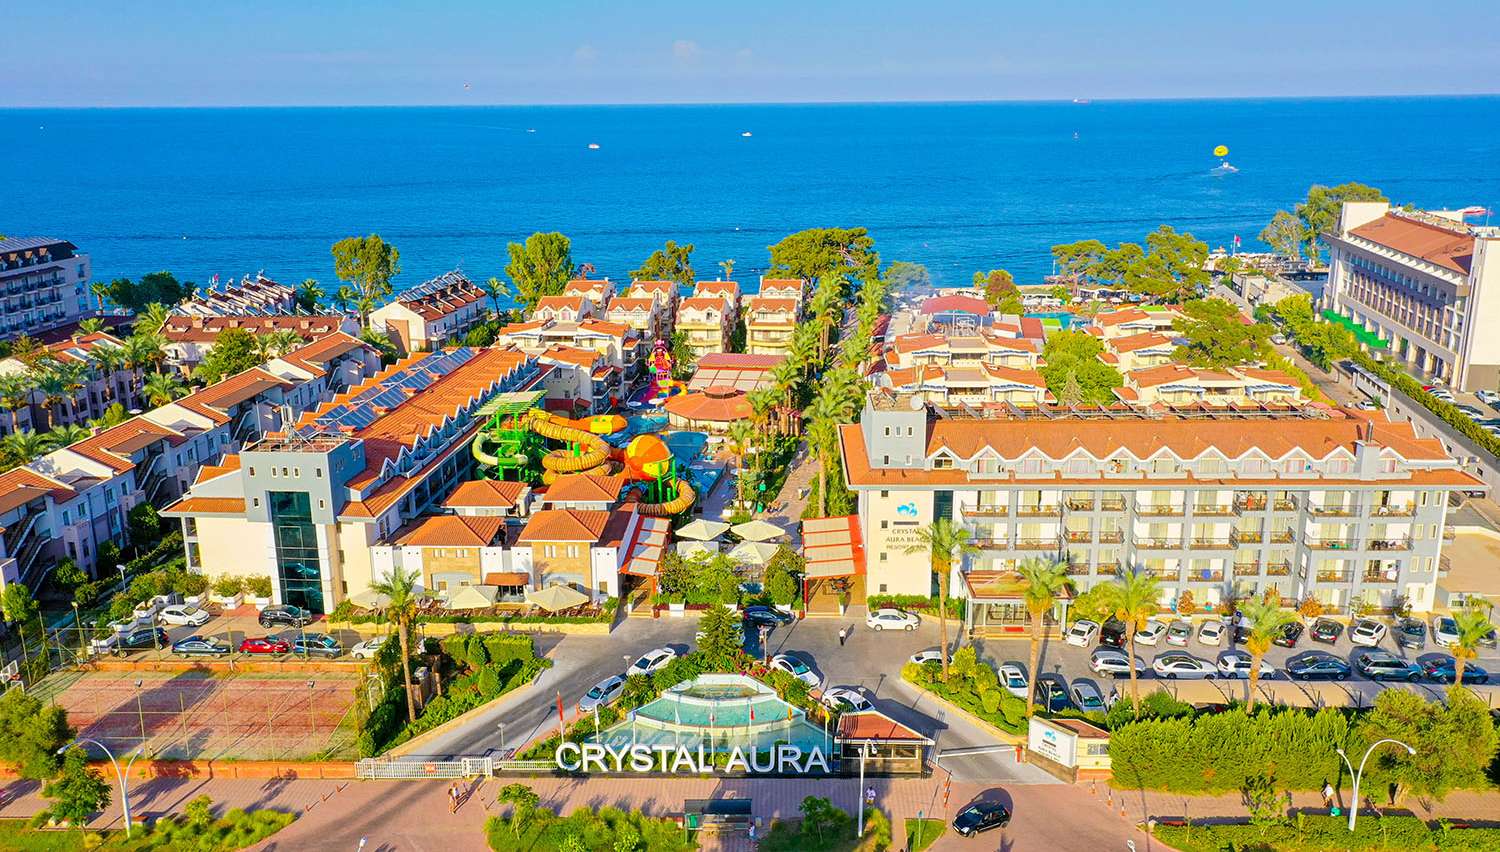 Türgi Kemer Crystal Aura Beach Resort and Spa